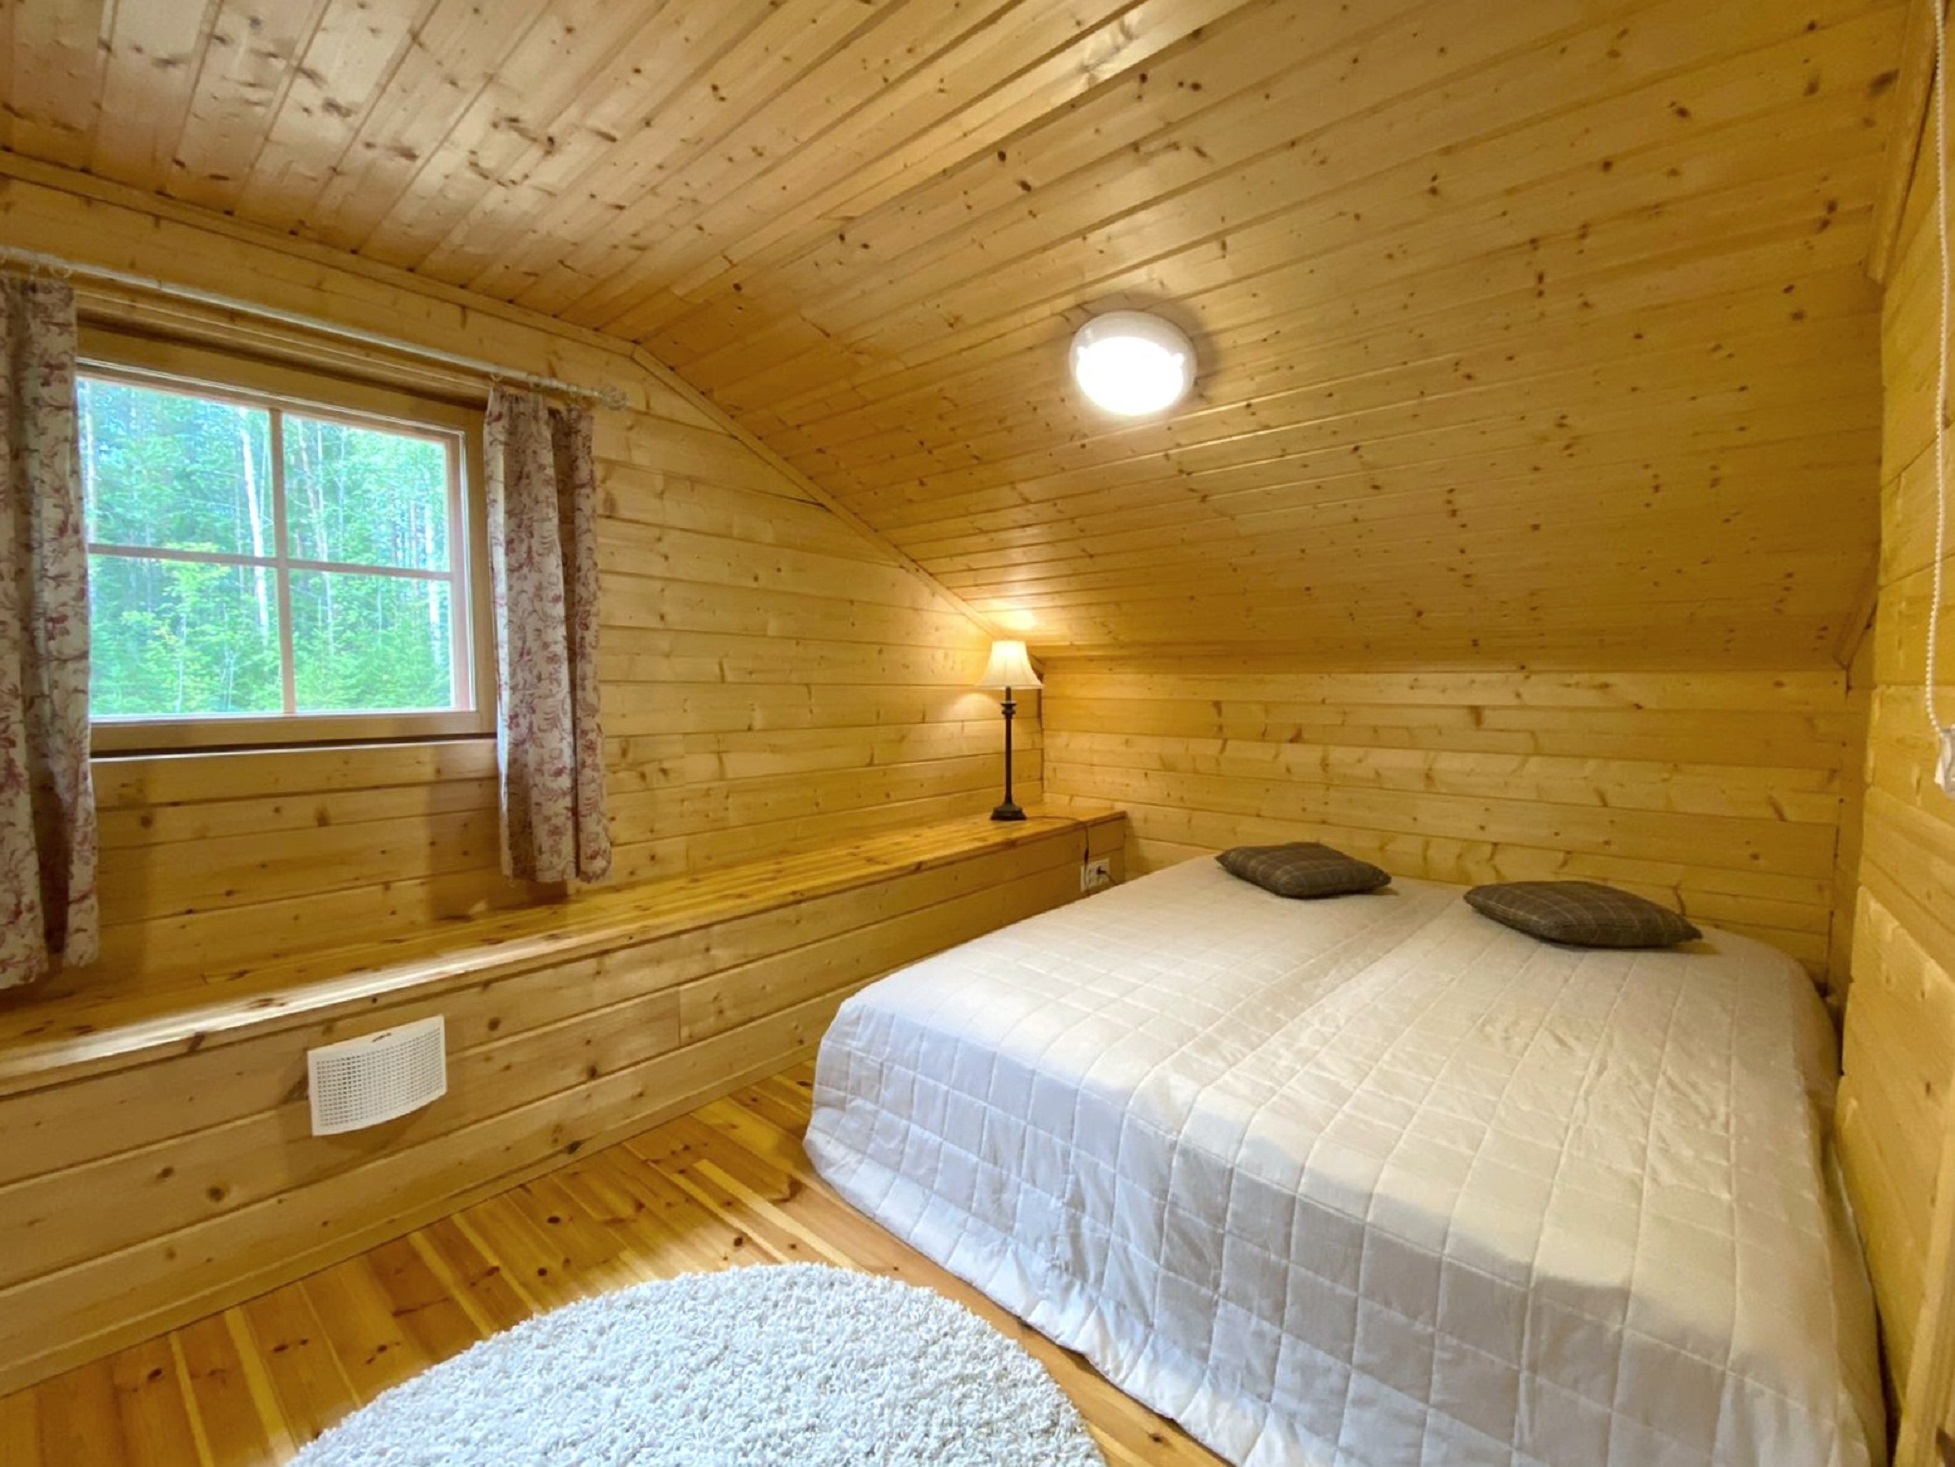 Comfortable log cabin Hugo in Rautjärvi, Finland